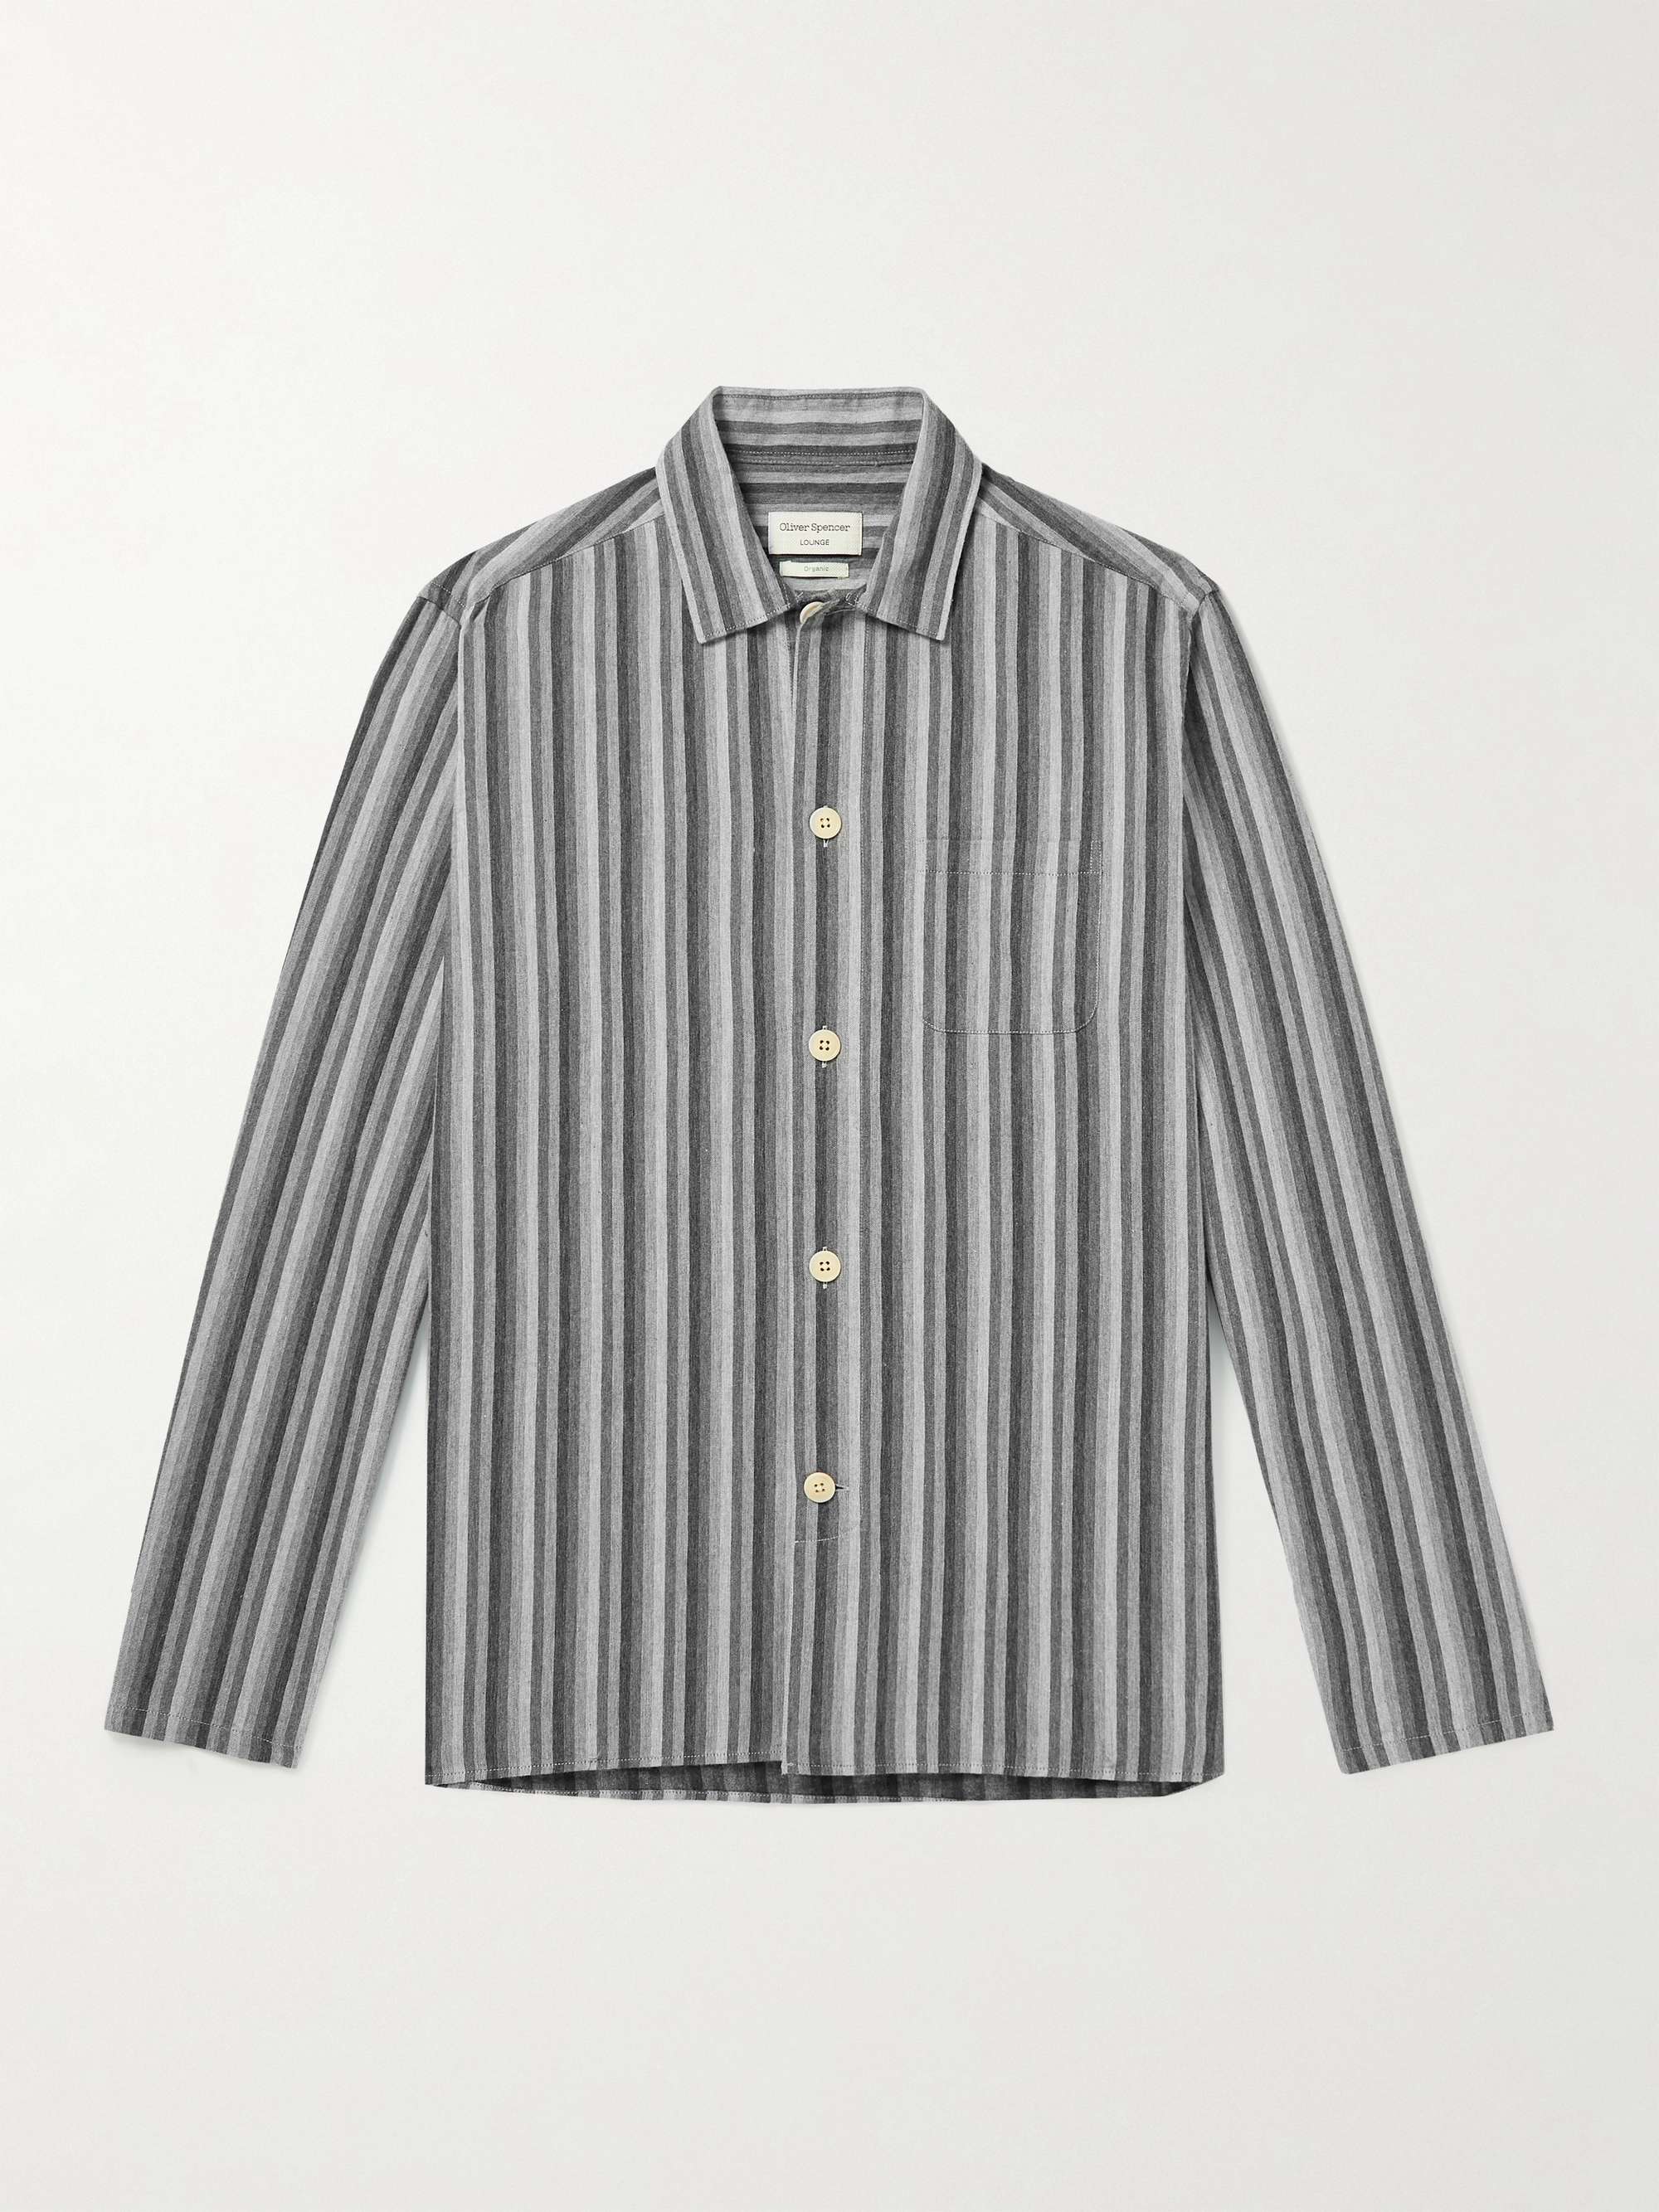 OLIVER SPENCER LOUNGEWEAR Striped Cotton Pyjama Shirt